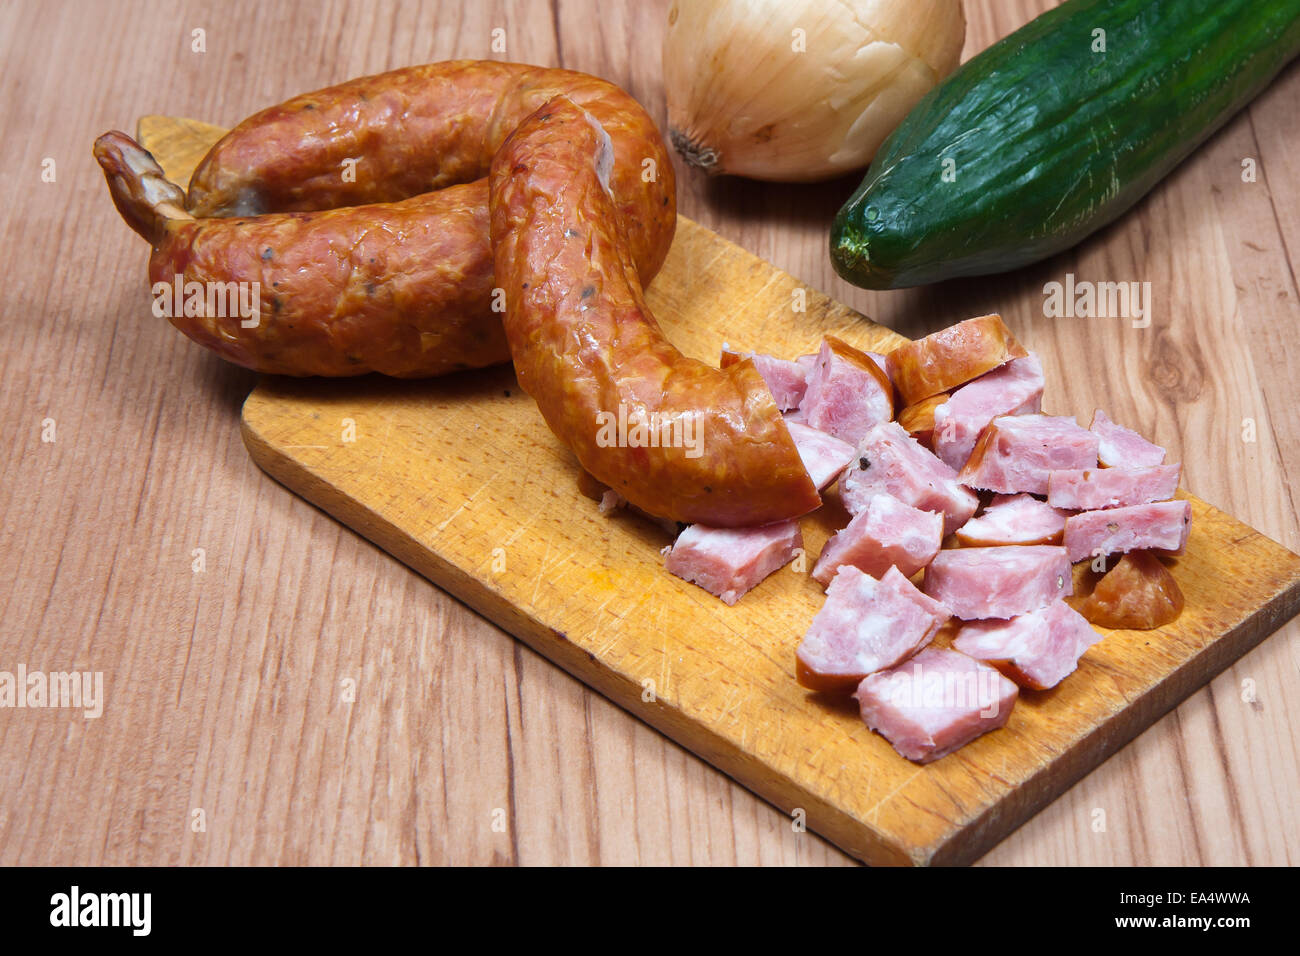 Polish, tasty sausage laying on a cutting board Stock Photo